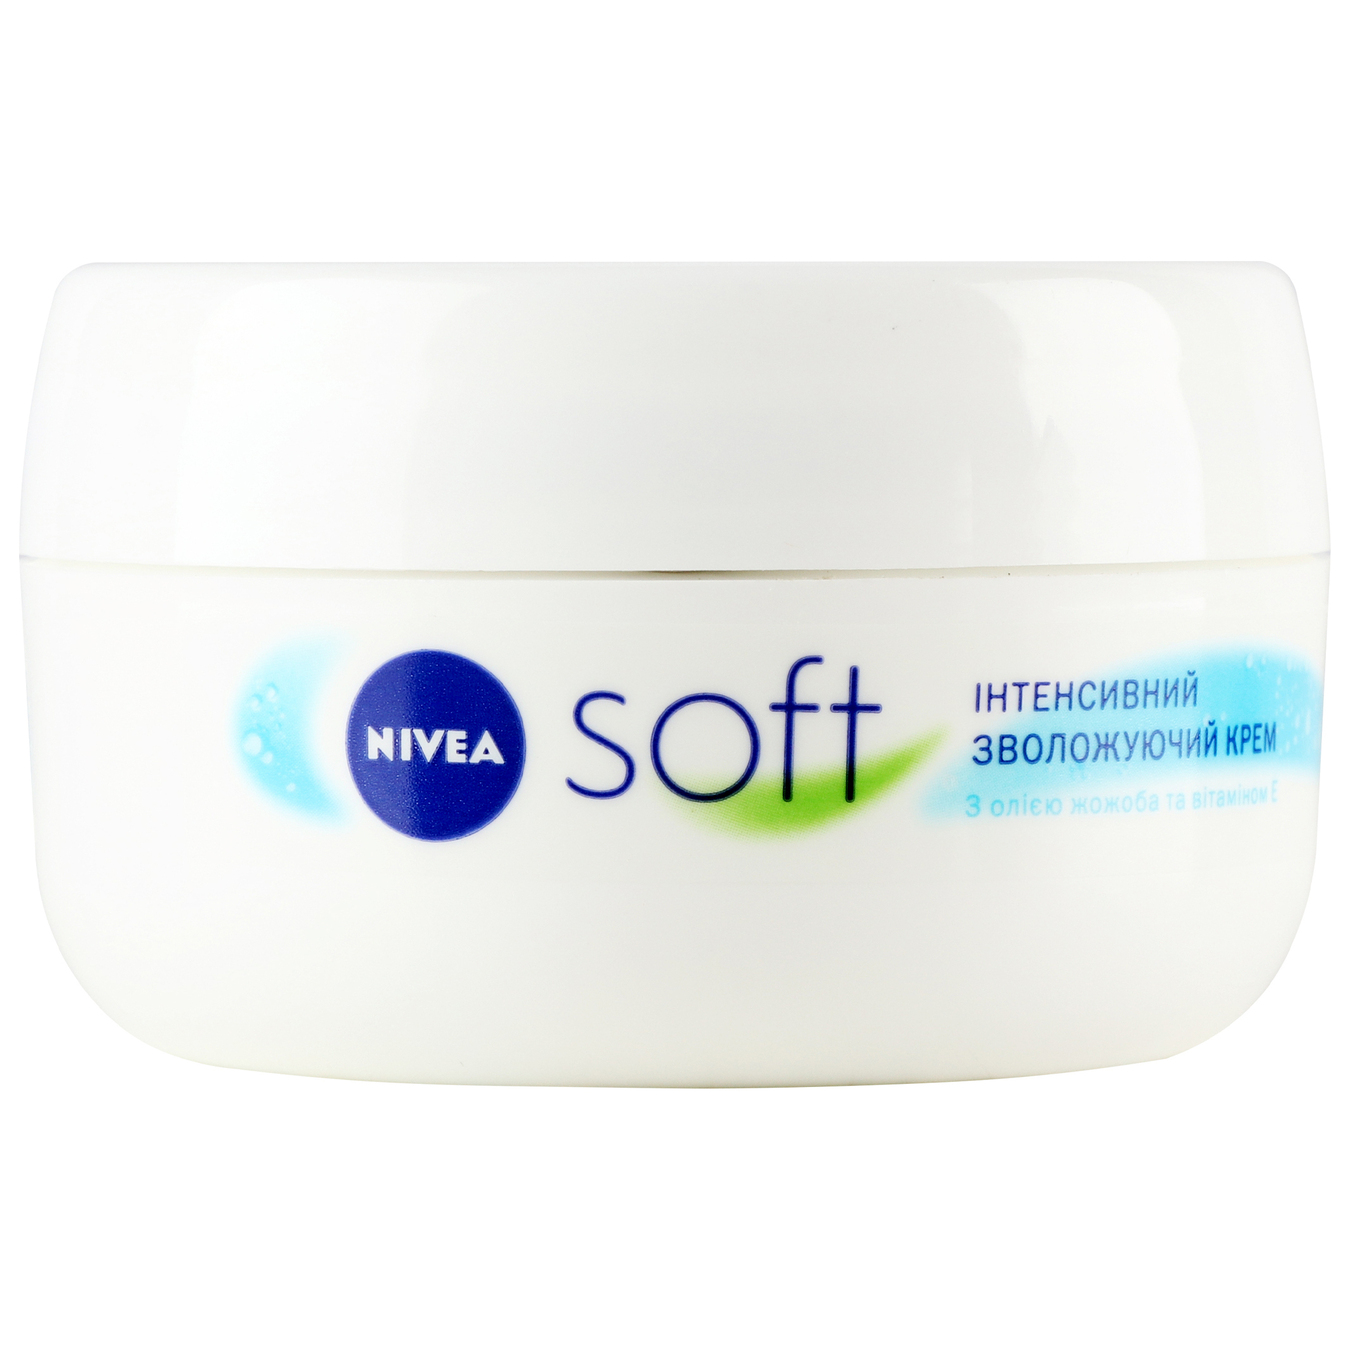 Nivea Soft Wear Intensive body cream with Jojoba Oil 100ml